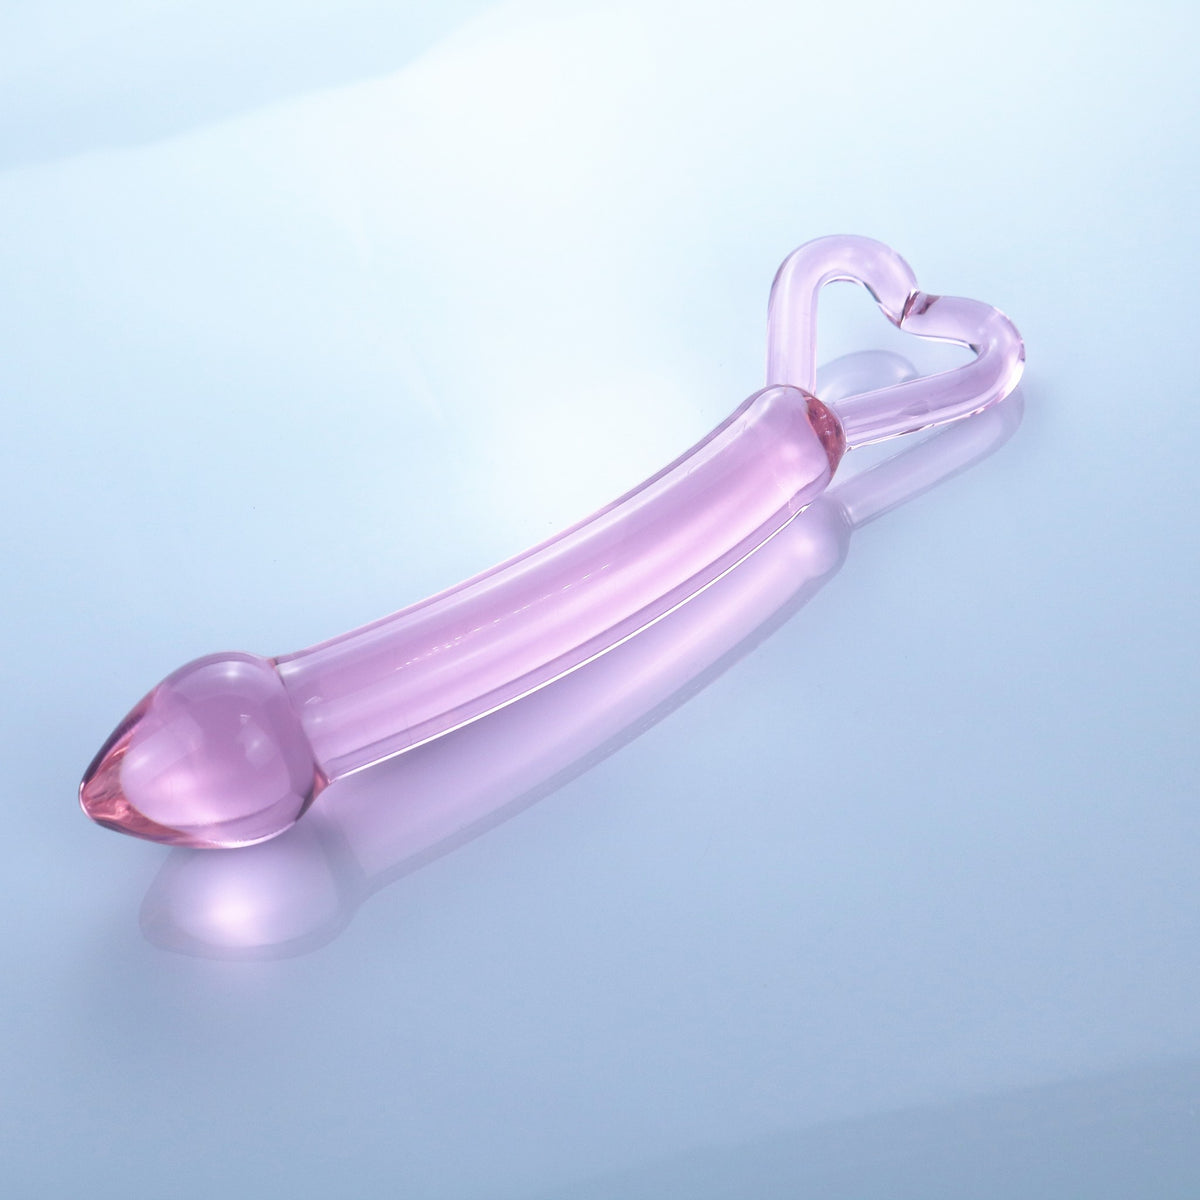 Cupid's Arrow Realistic Crystal Glass Butt Plug / Anal Beads / Thruster Dildo